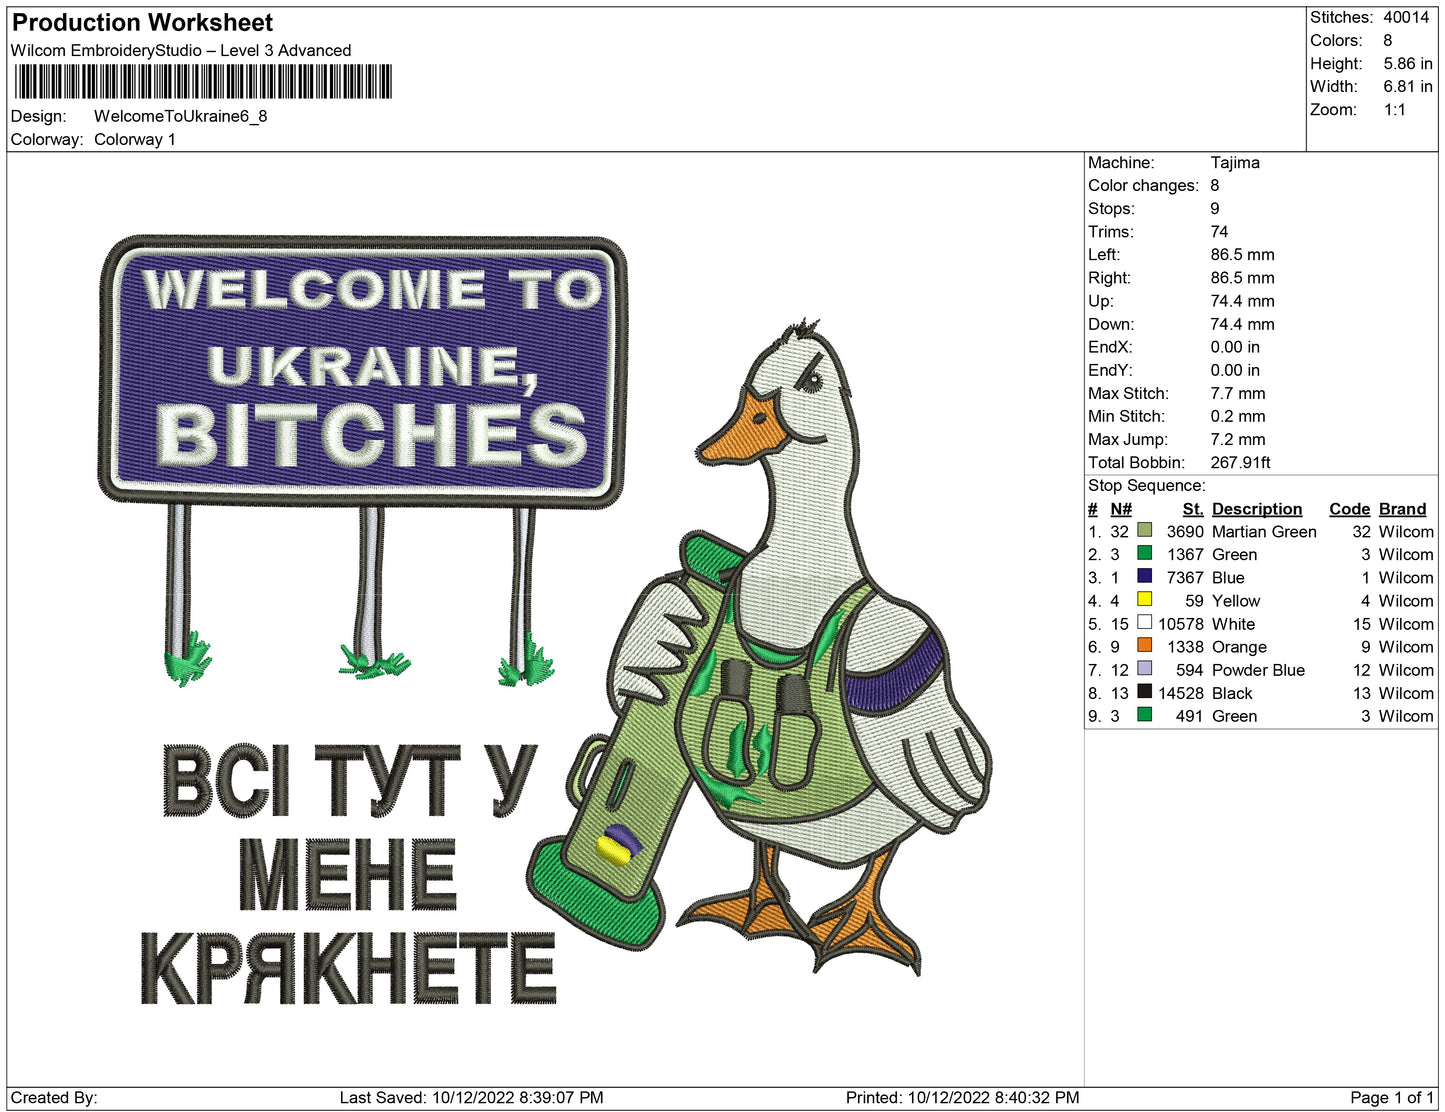 Welcome to ukraine bitch